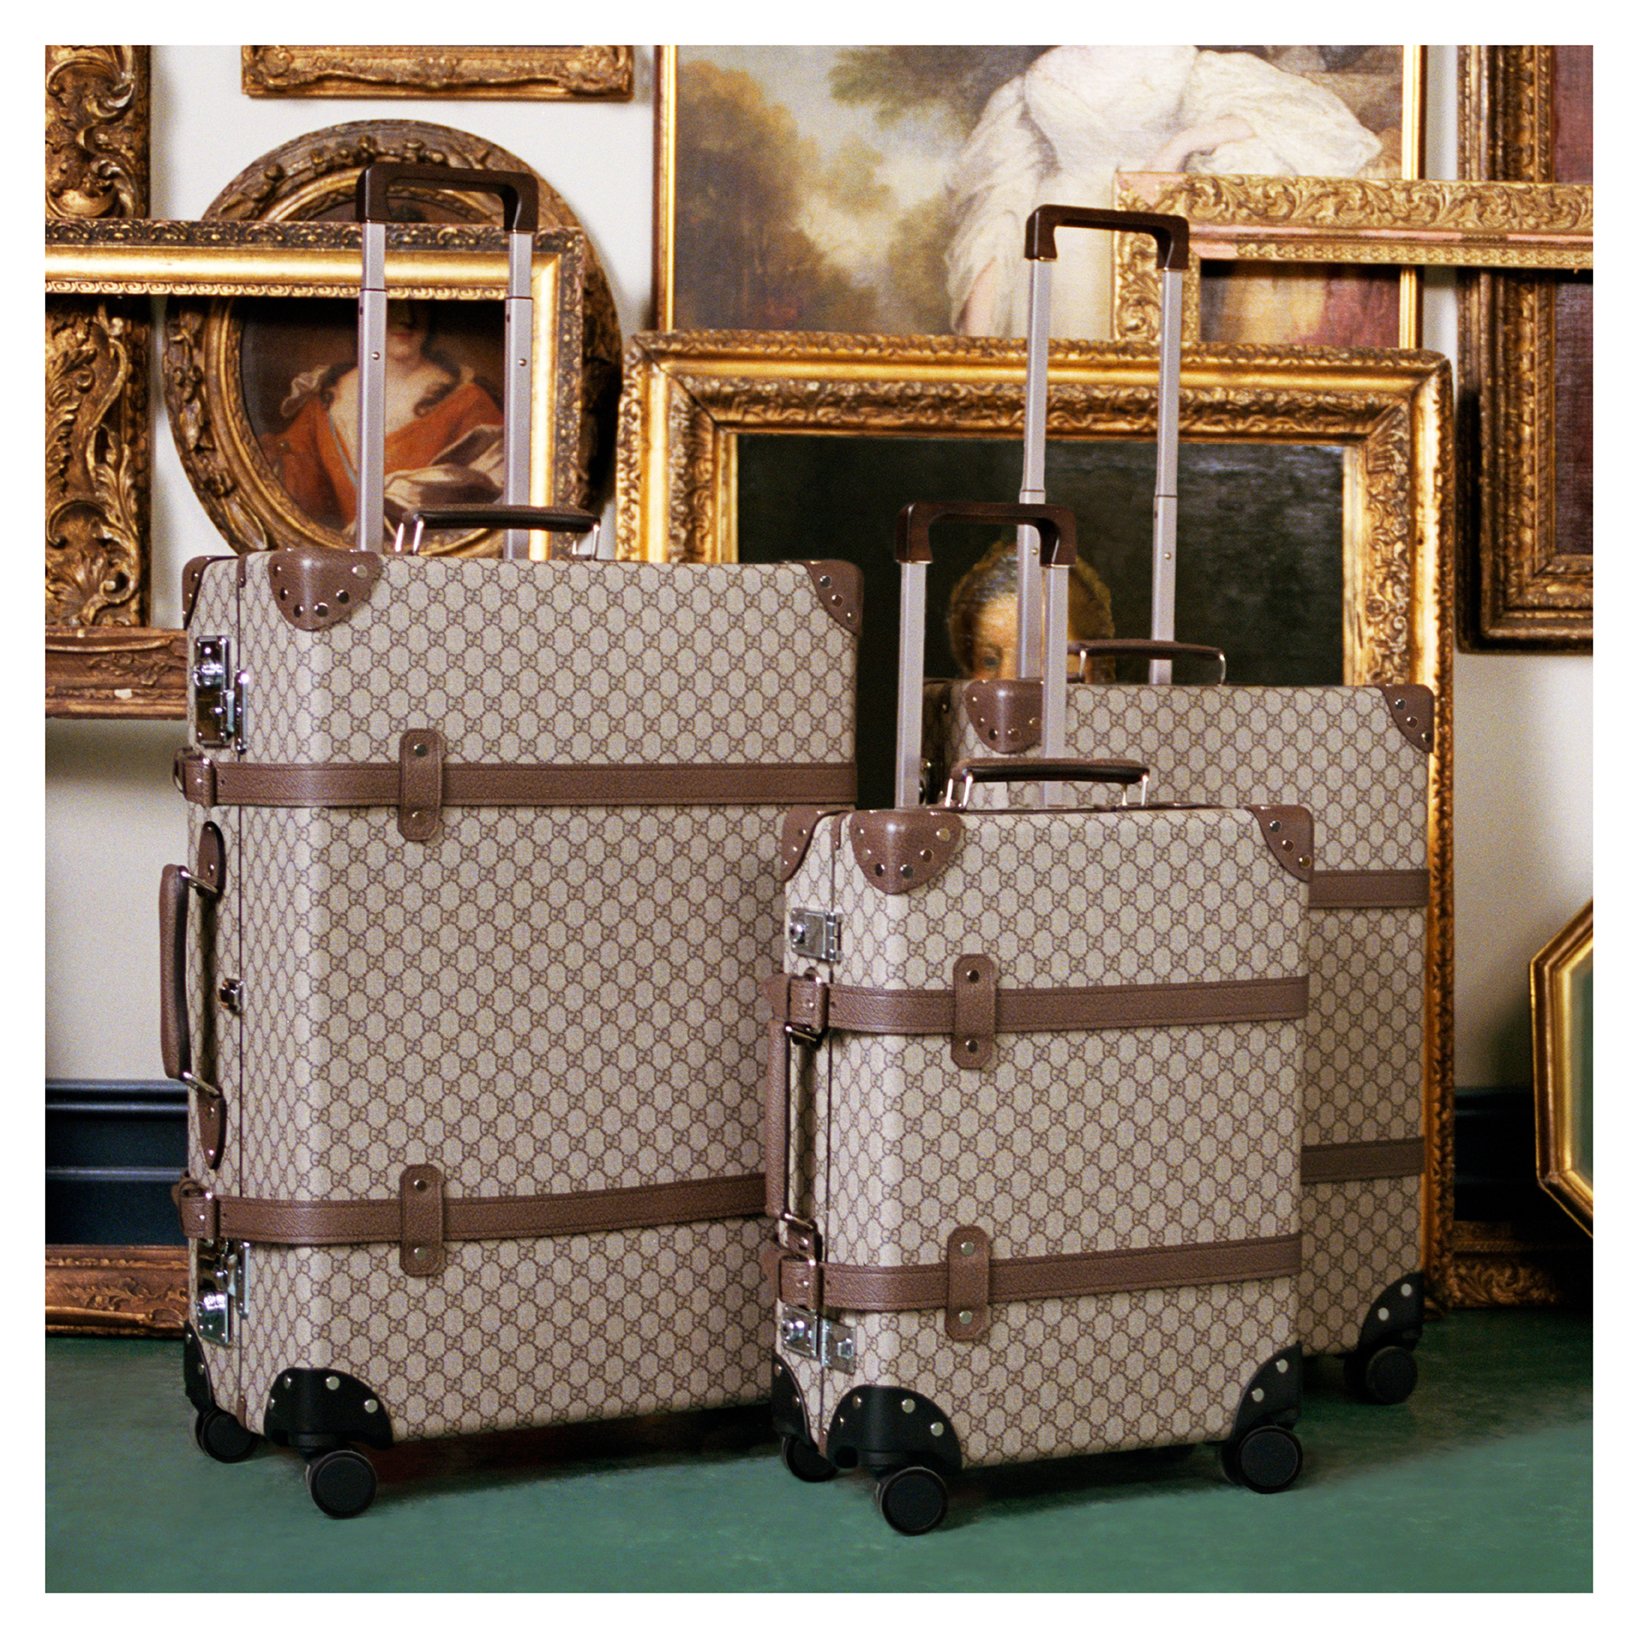 Gucci Luggage Sets Vintage Luggage